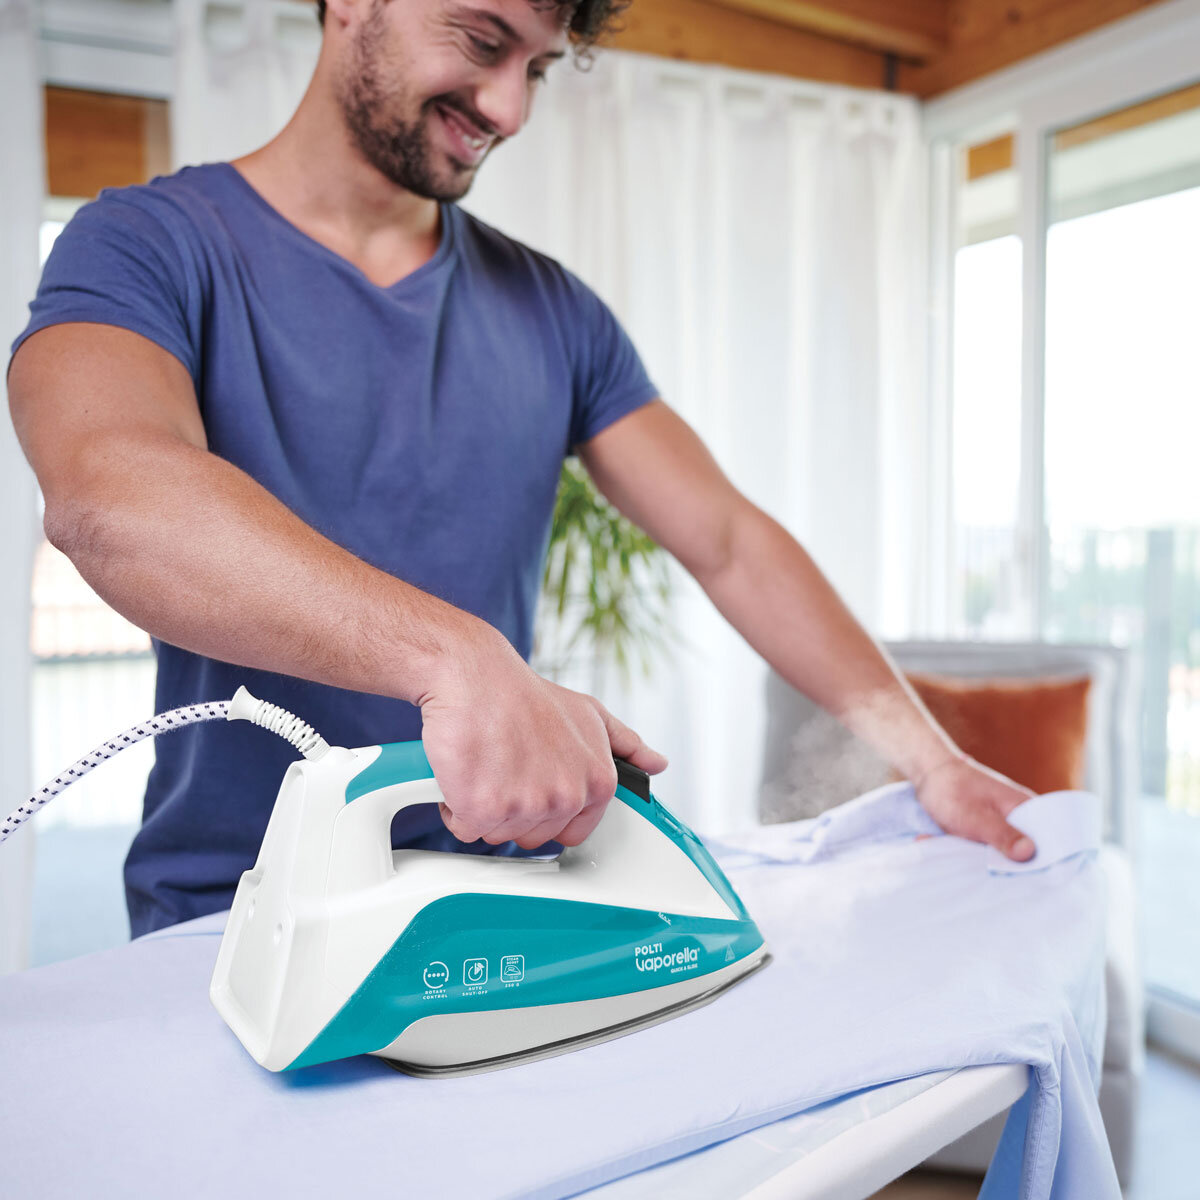 Lifestyle Image of man ironing with Polti Vaporella QS210